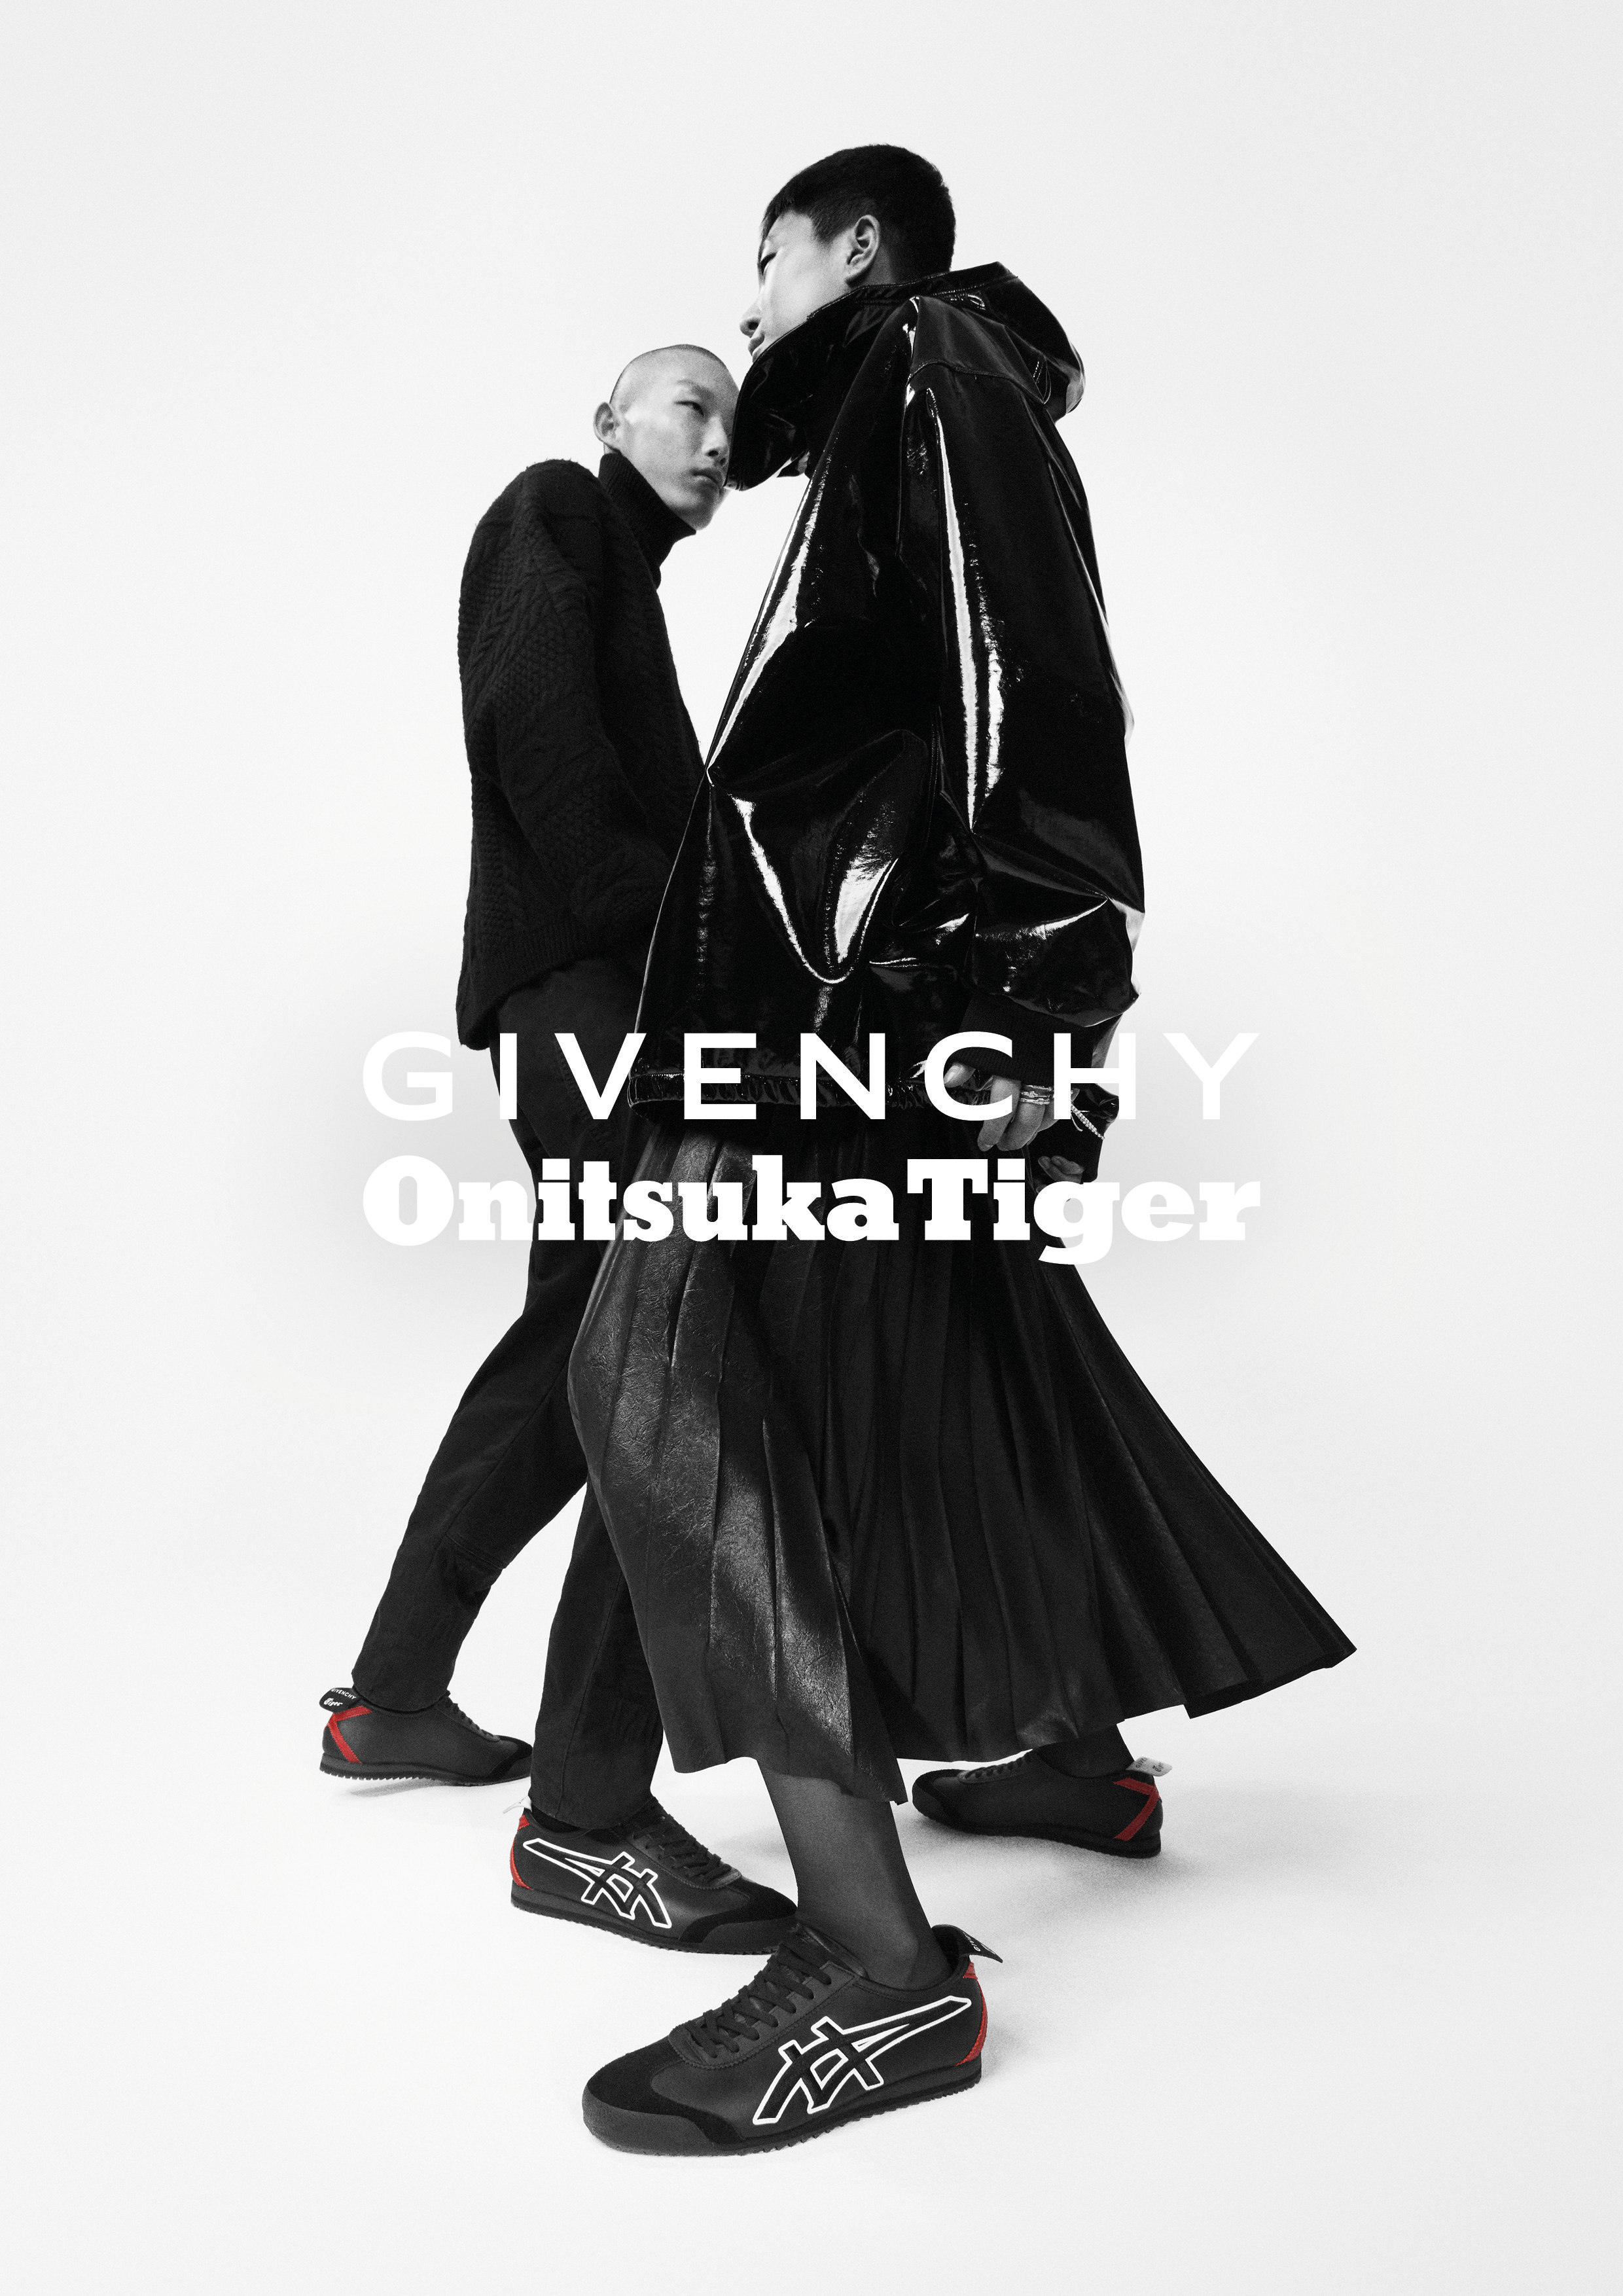 ONITSUKA TIGER鬼塚虎携手GIVENCHY纪梵希 于6月13日2020佛罗伦萨PITTI UOMO男装展 欣然揭幕限量版运动鞋系列